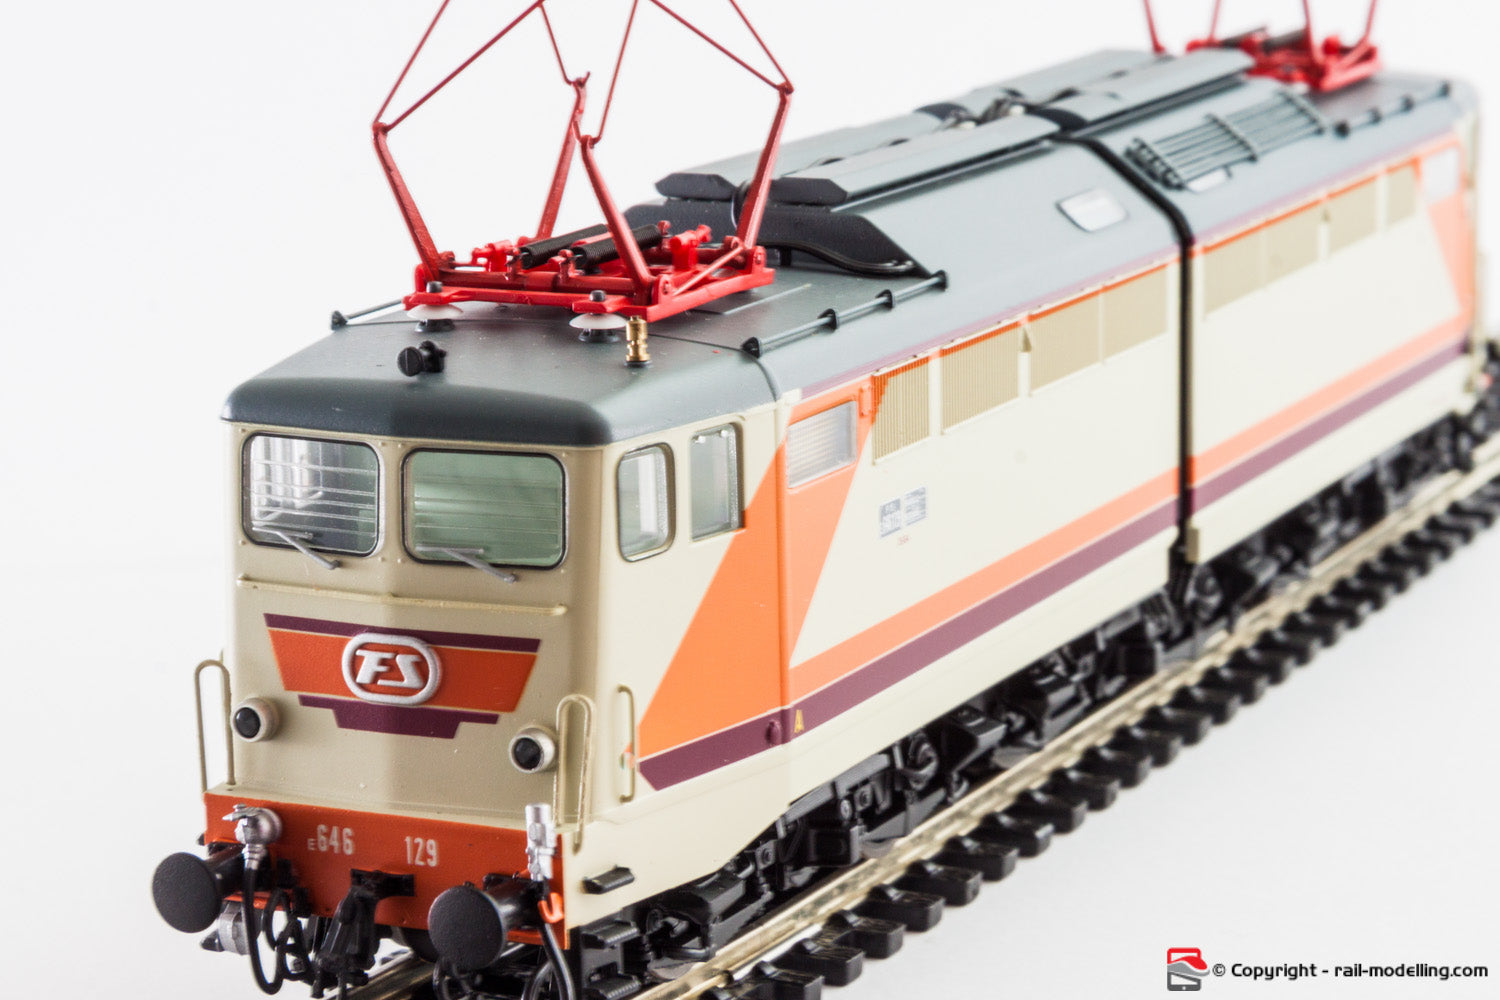 ACME 60135 - H0 1:87 - Locomotiva elettrica E 646 129 2° serie in livrea navetta Epoca IV